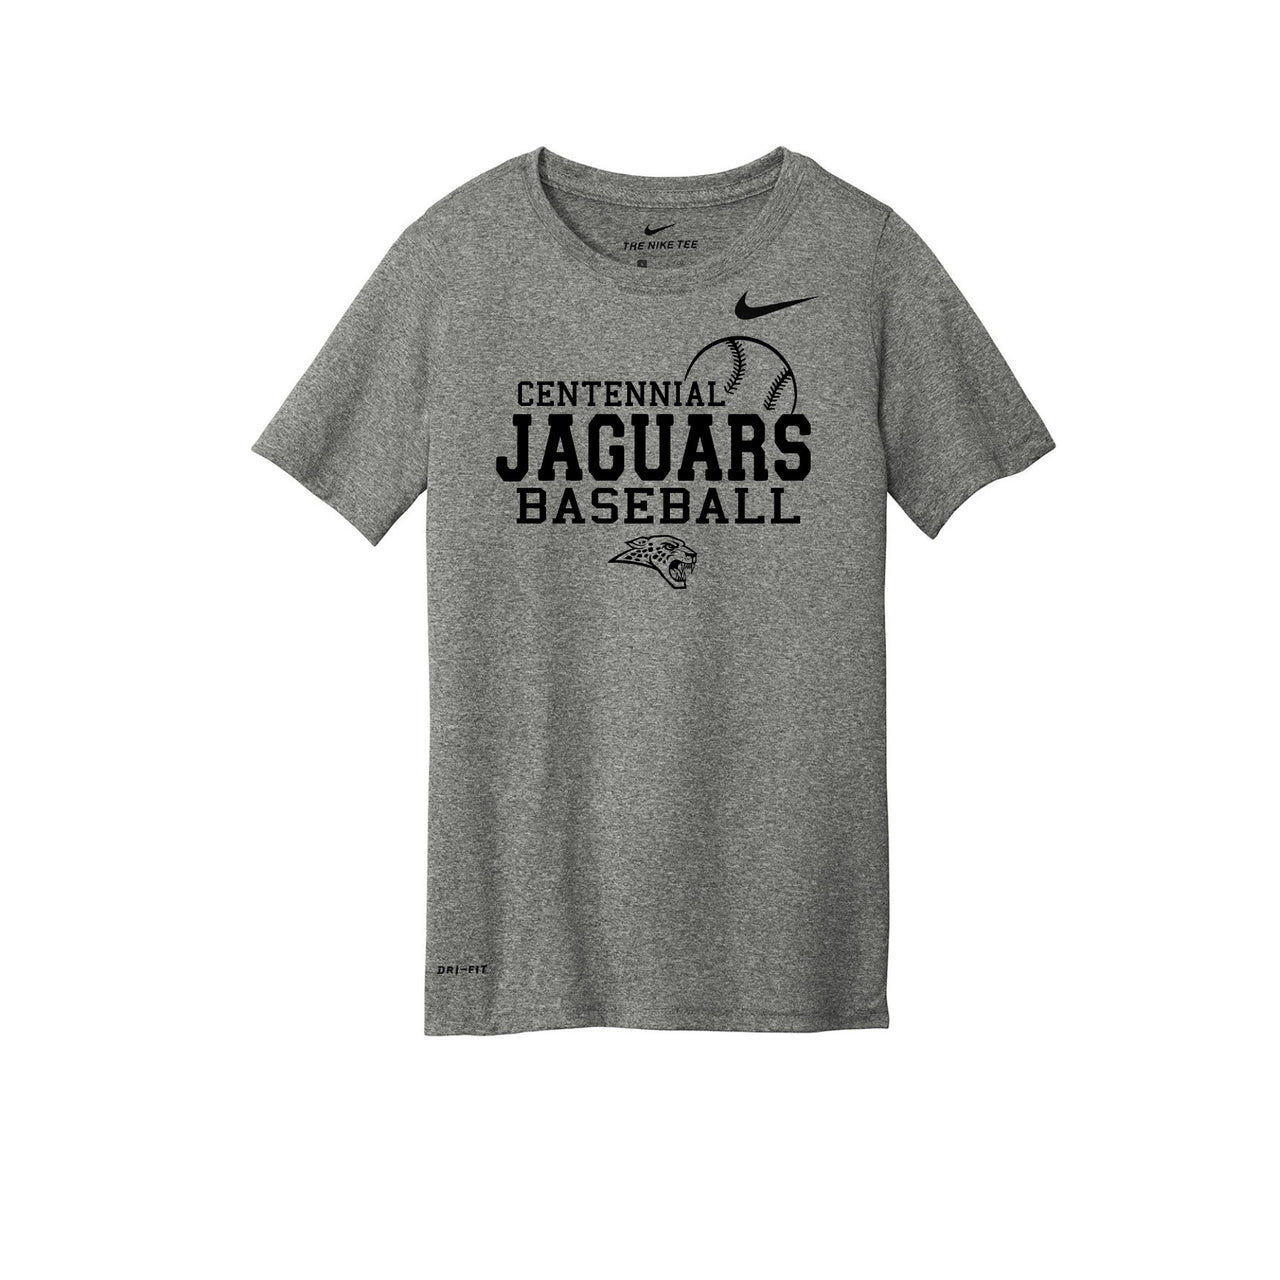 Centennial Jaguars Baseball - Youth Nike Legend Tee